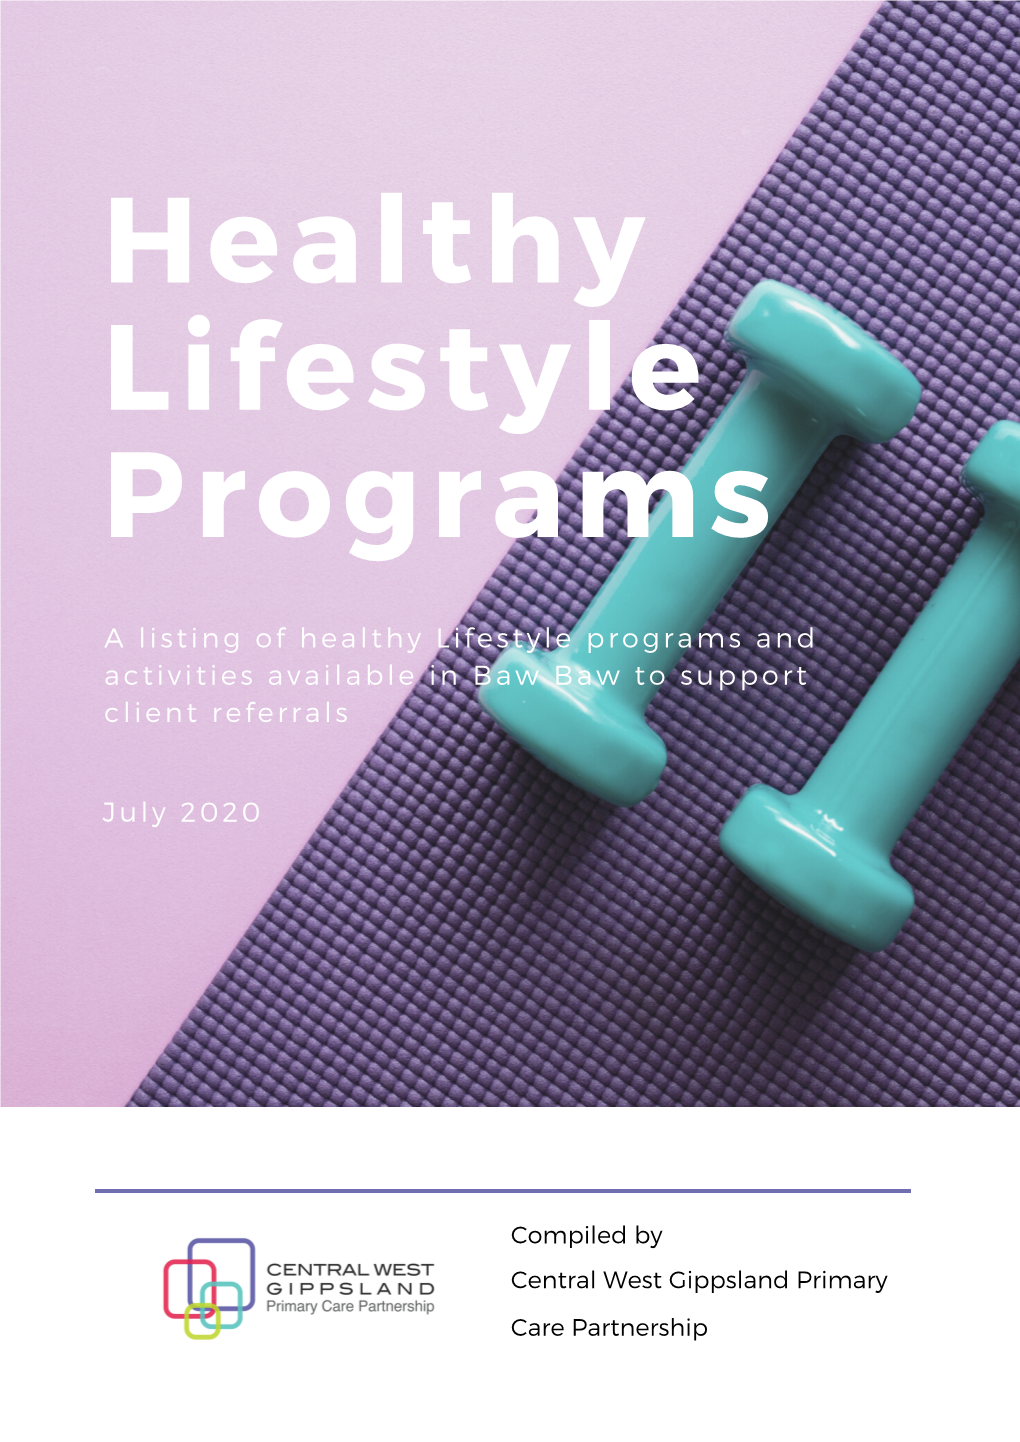 Baw Baw Healthy Lifestyle Programs